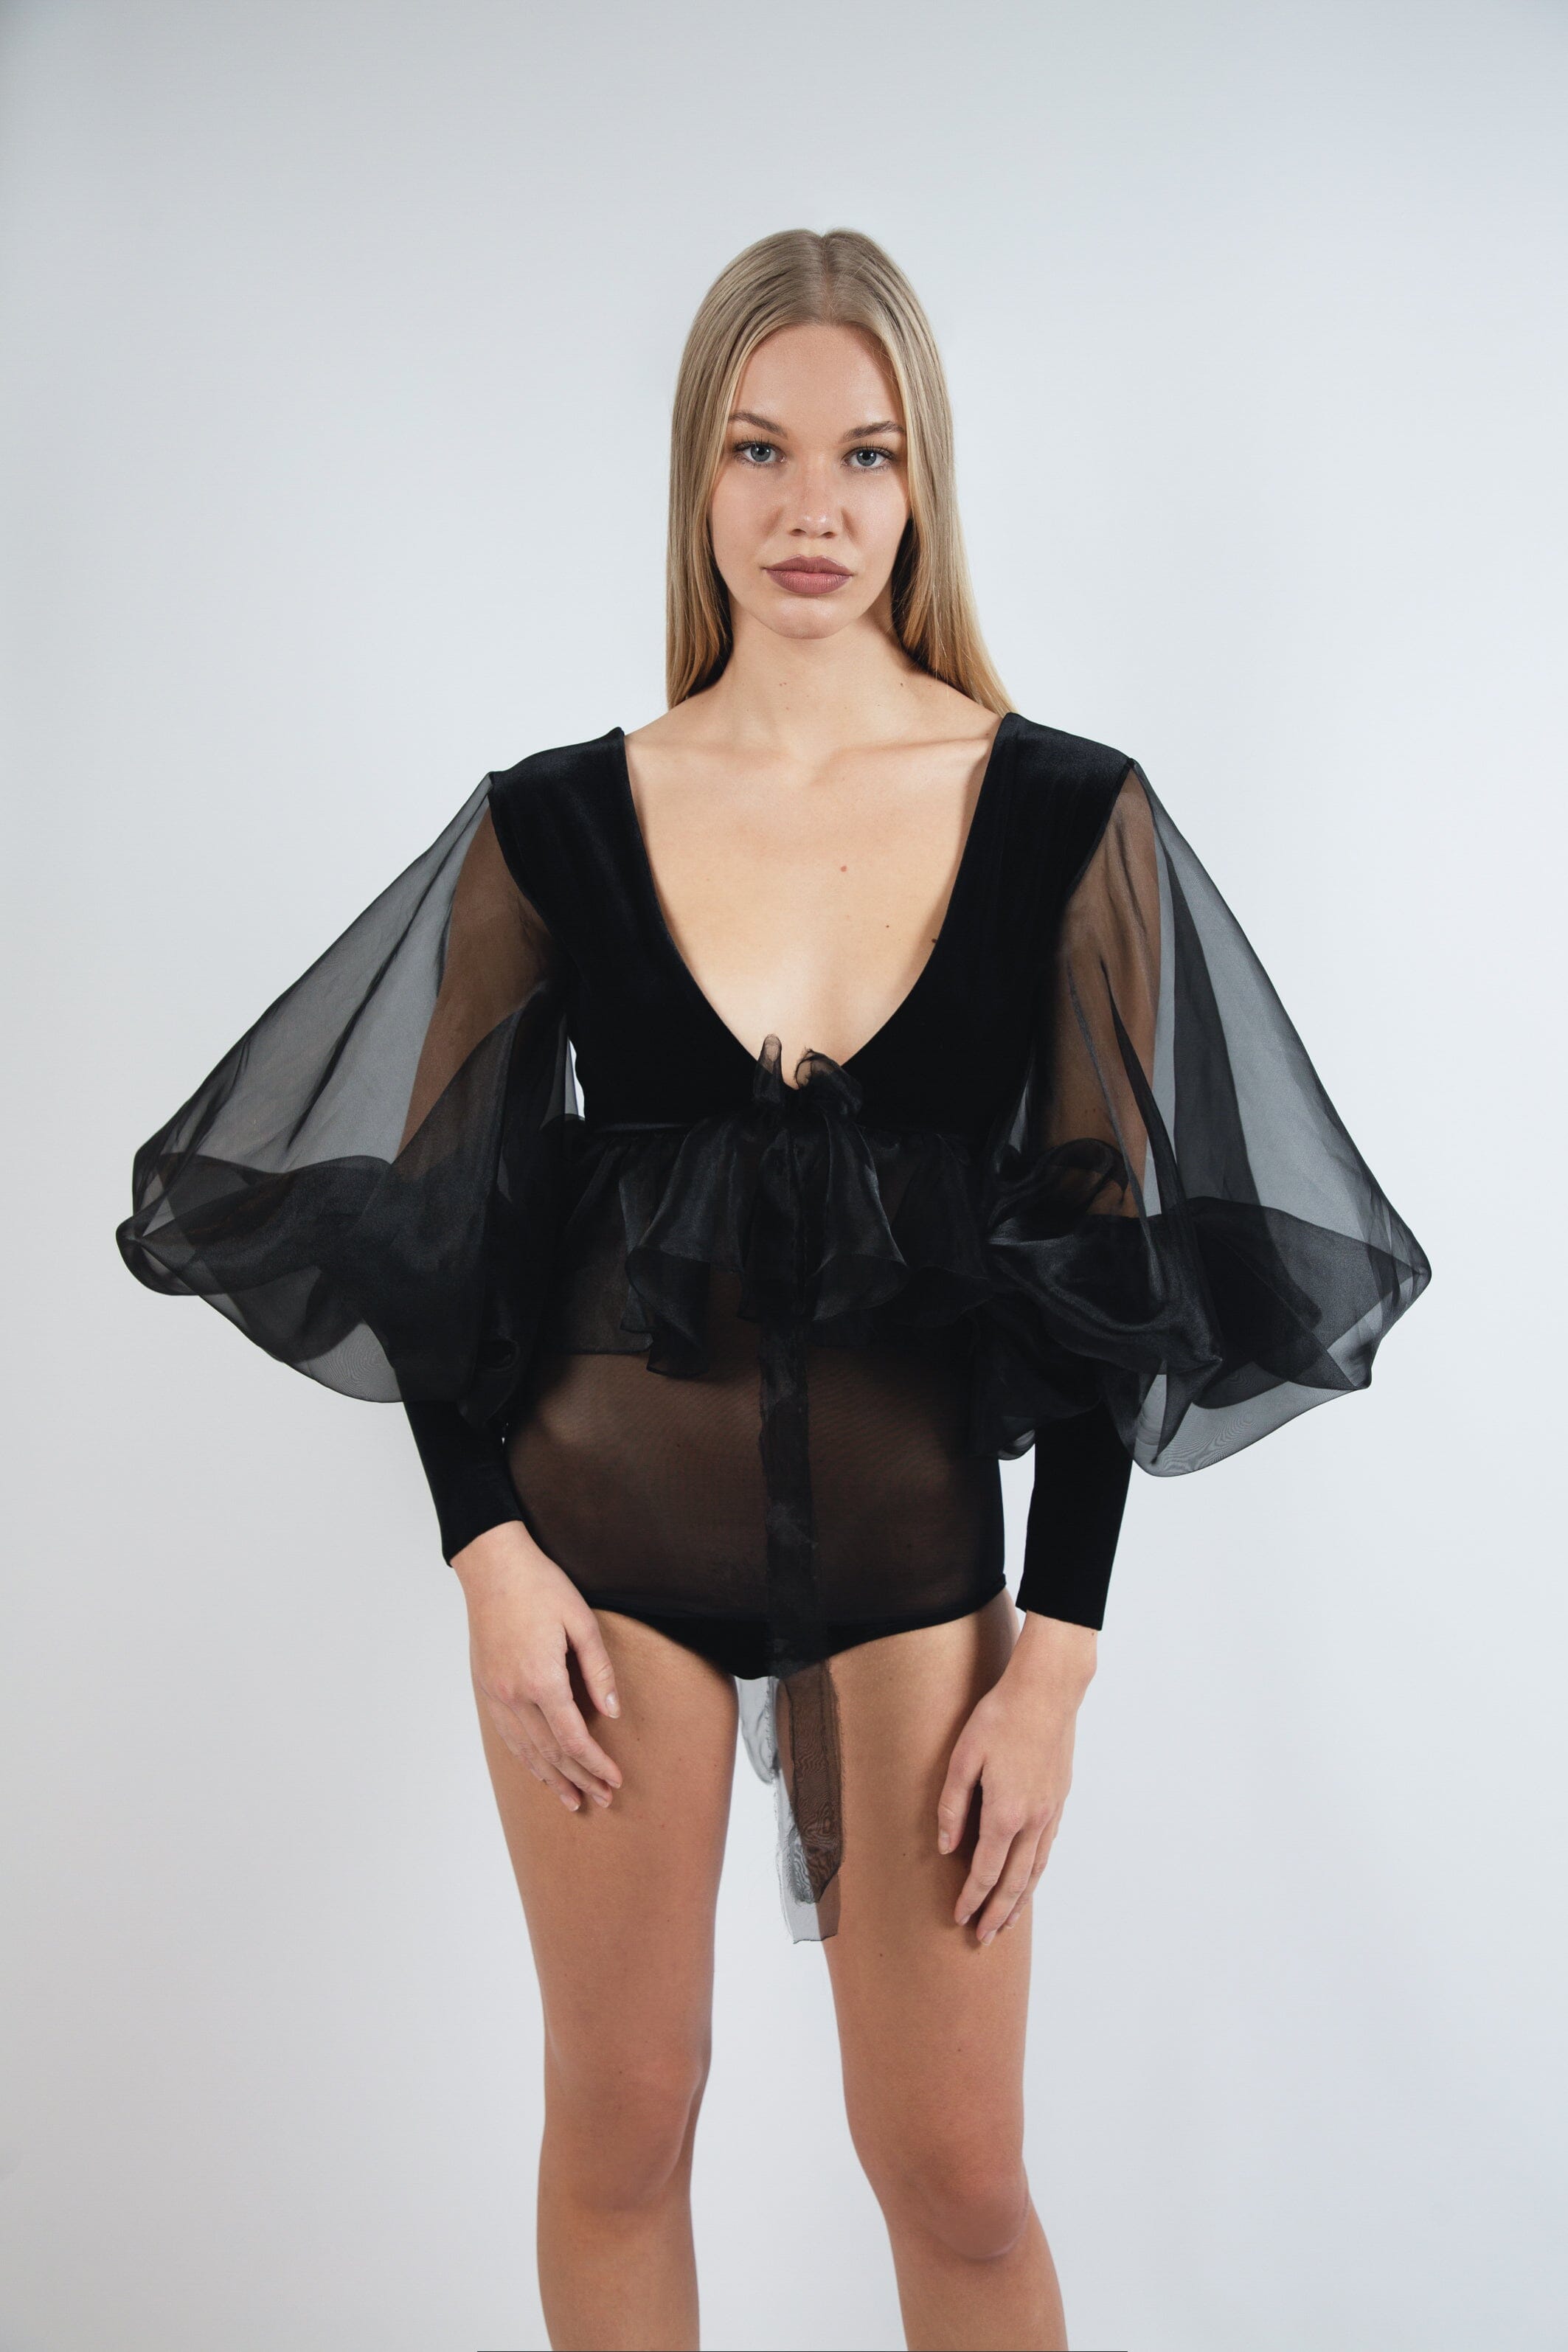  Femme Fatale Bodysuit Black Product Amoralle